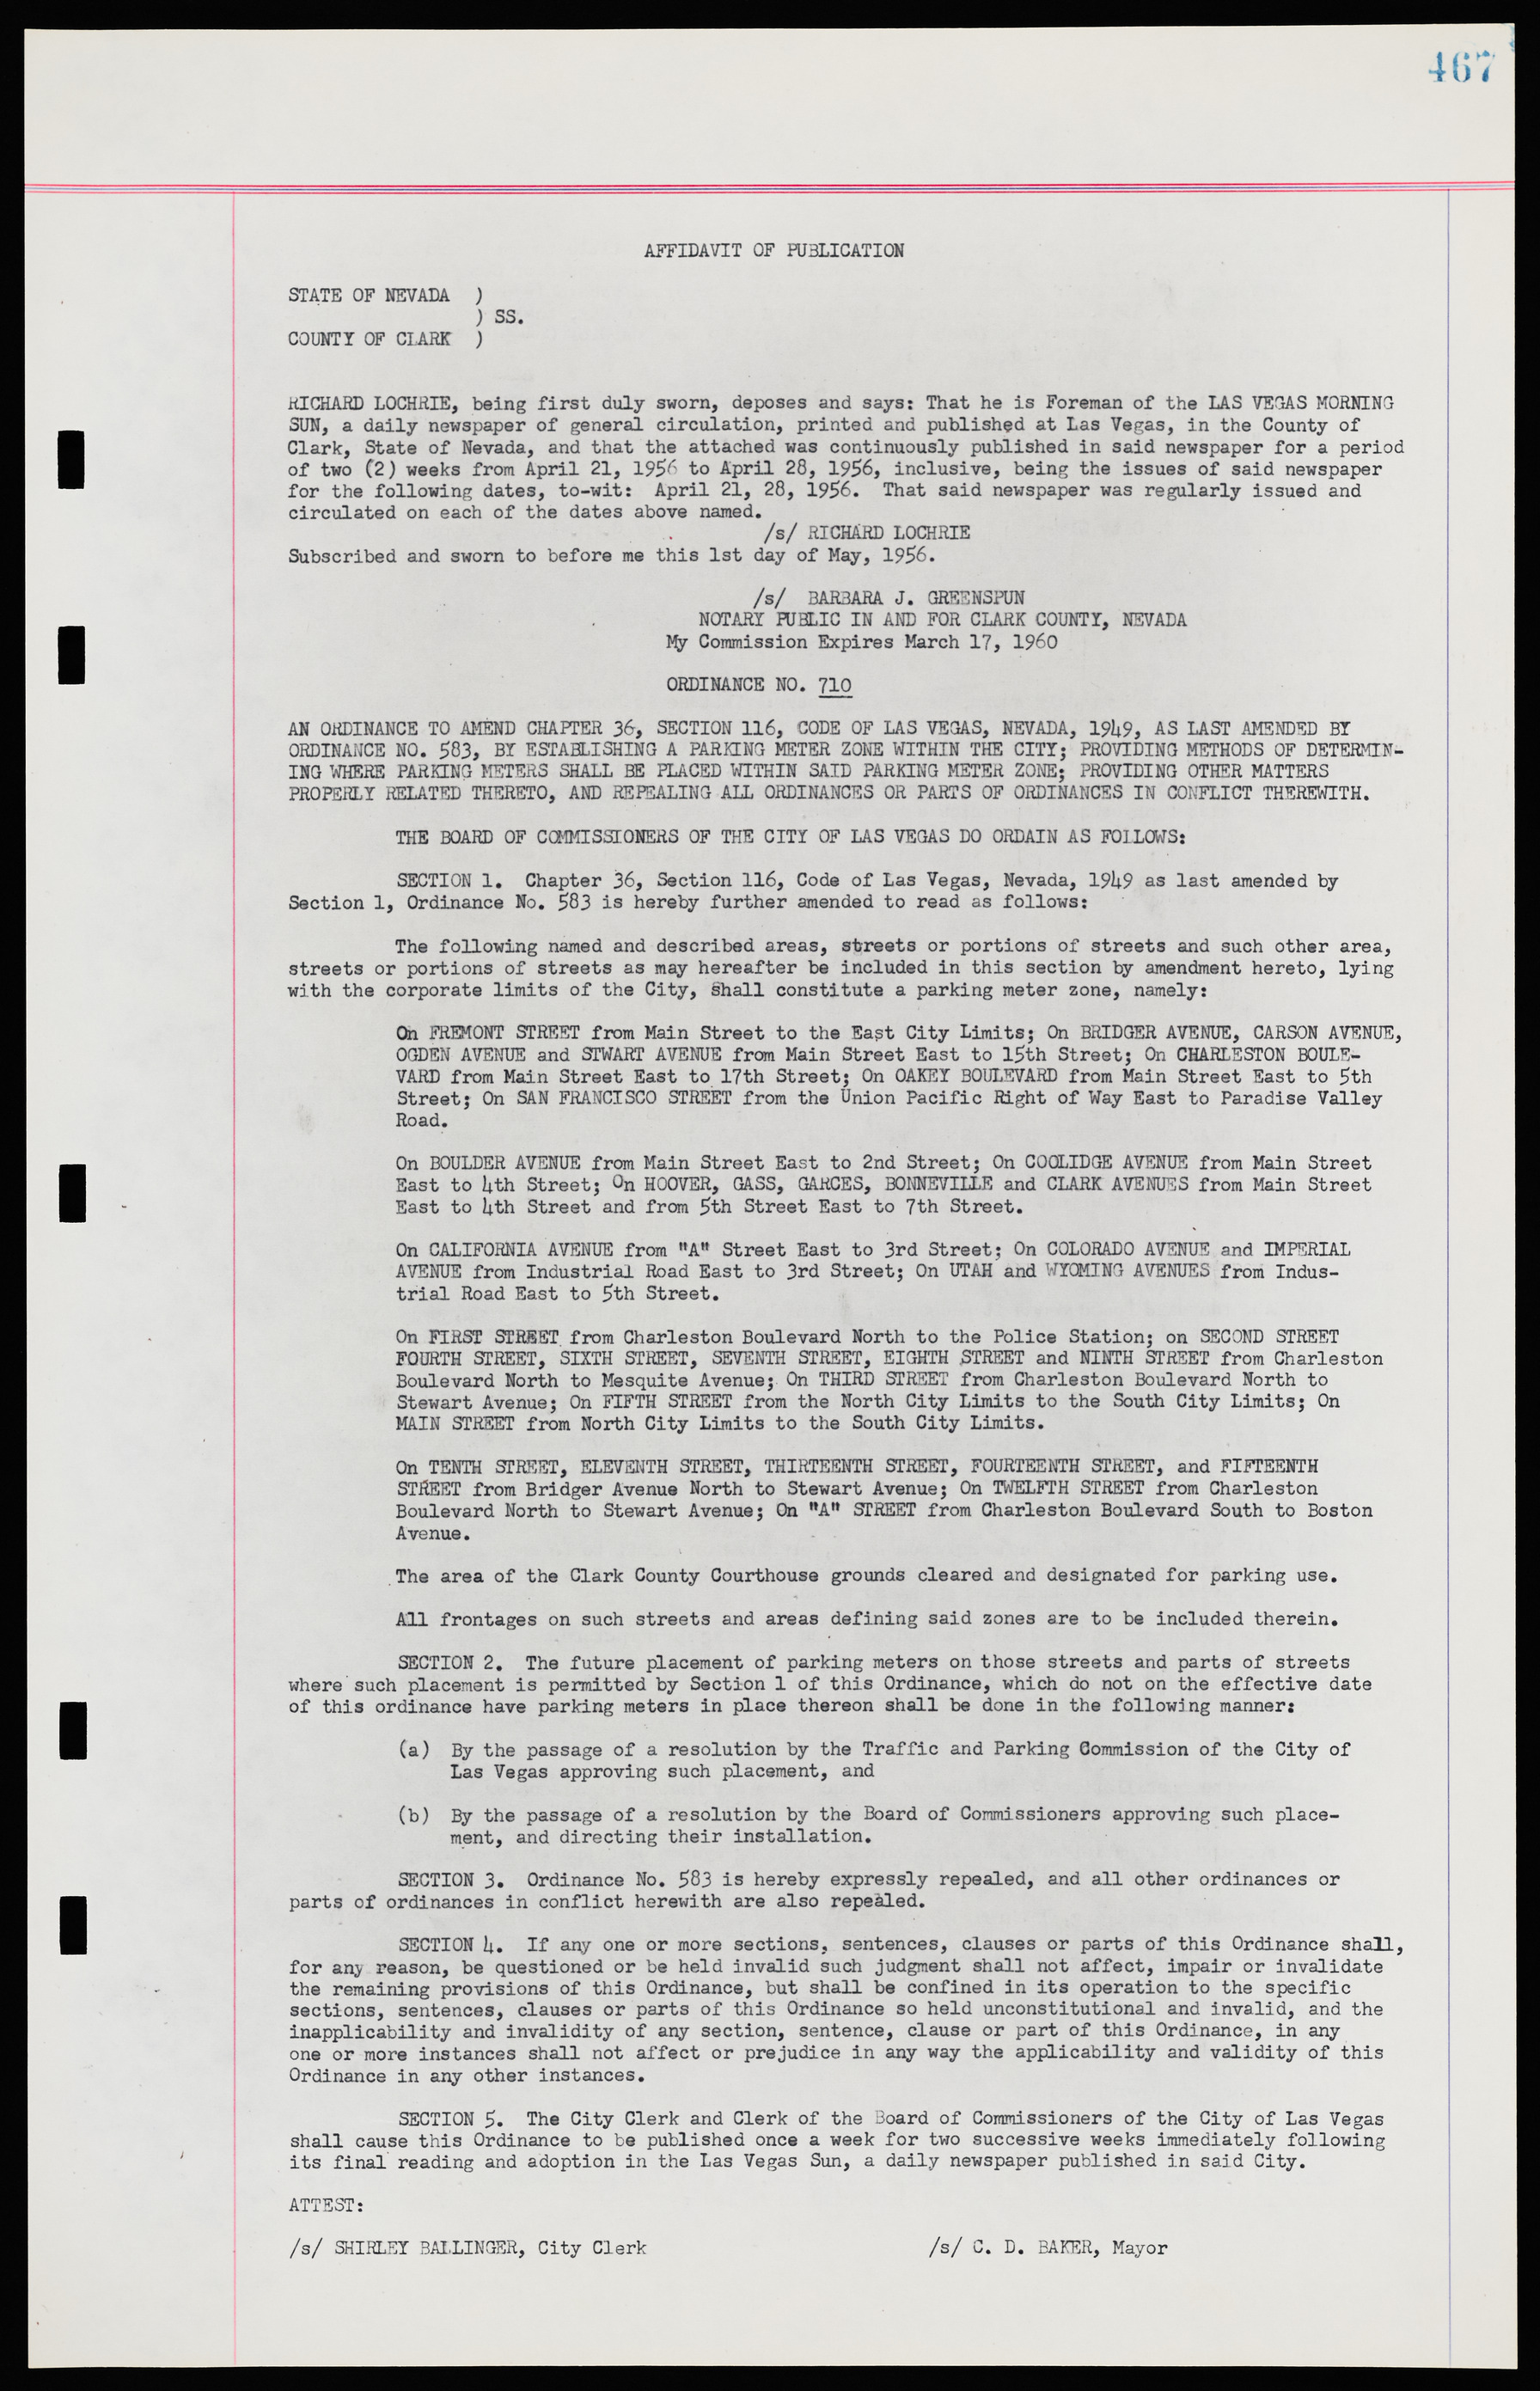 Las Vegas City Ordinances, November 13, 1950 to August 6, 1958, lvc000015-475